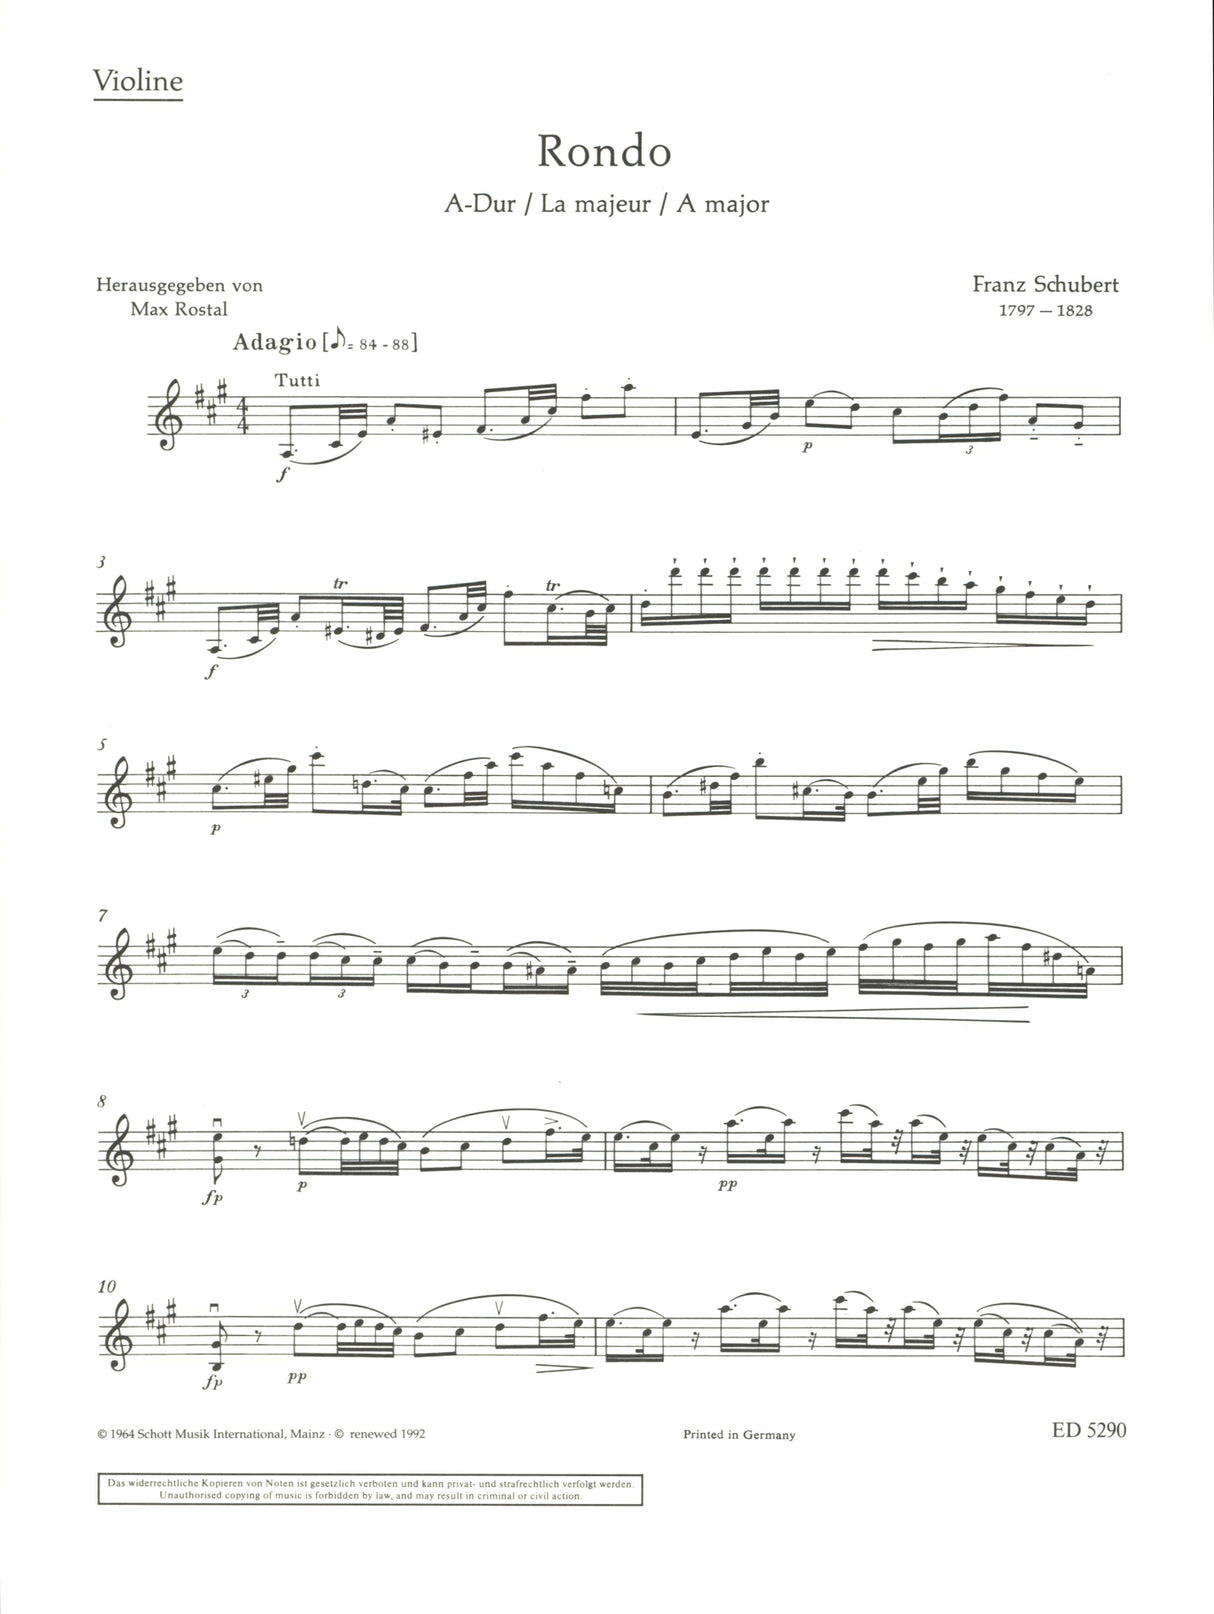 Schubert: Rondo in A Major, D 438